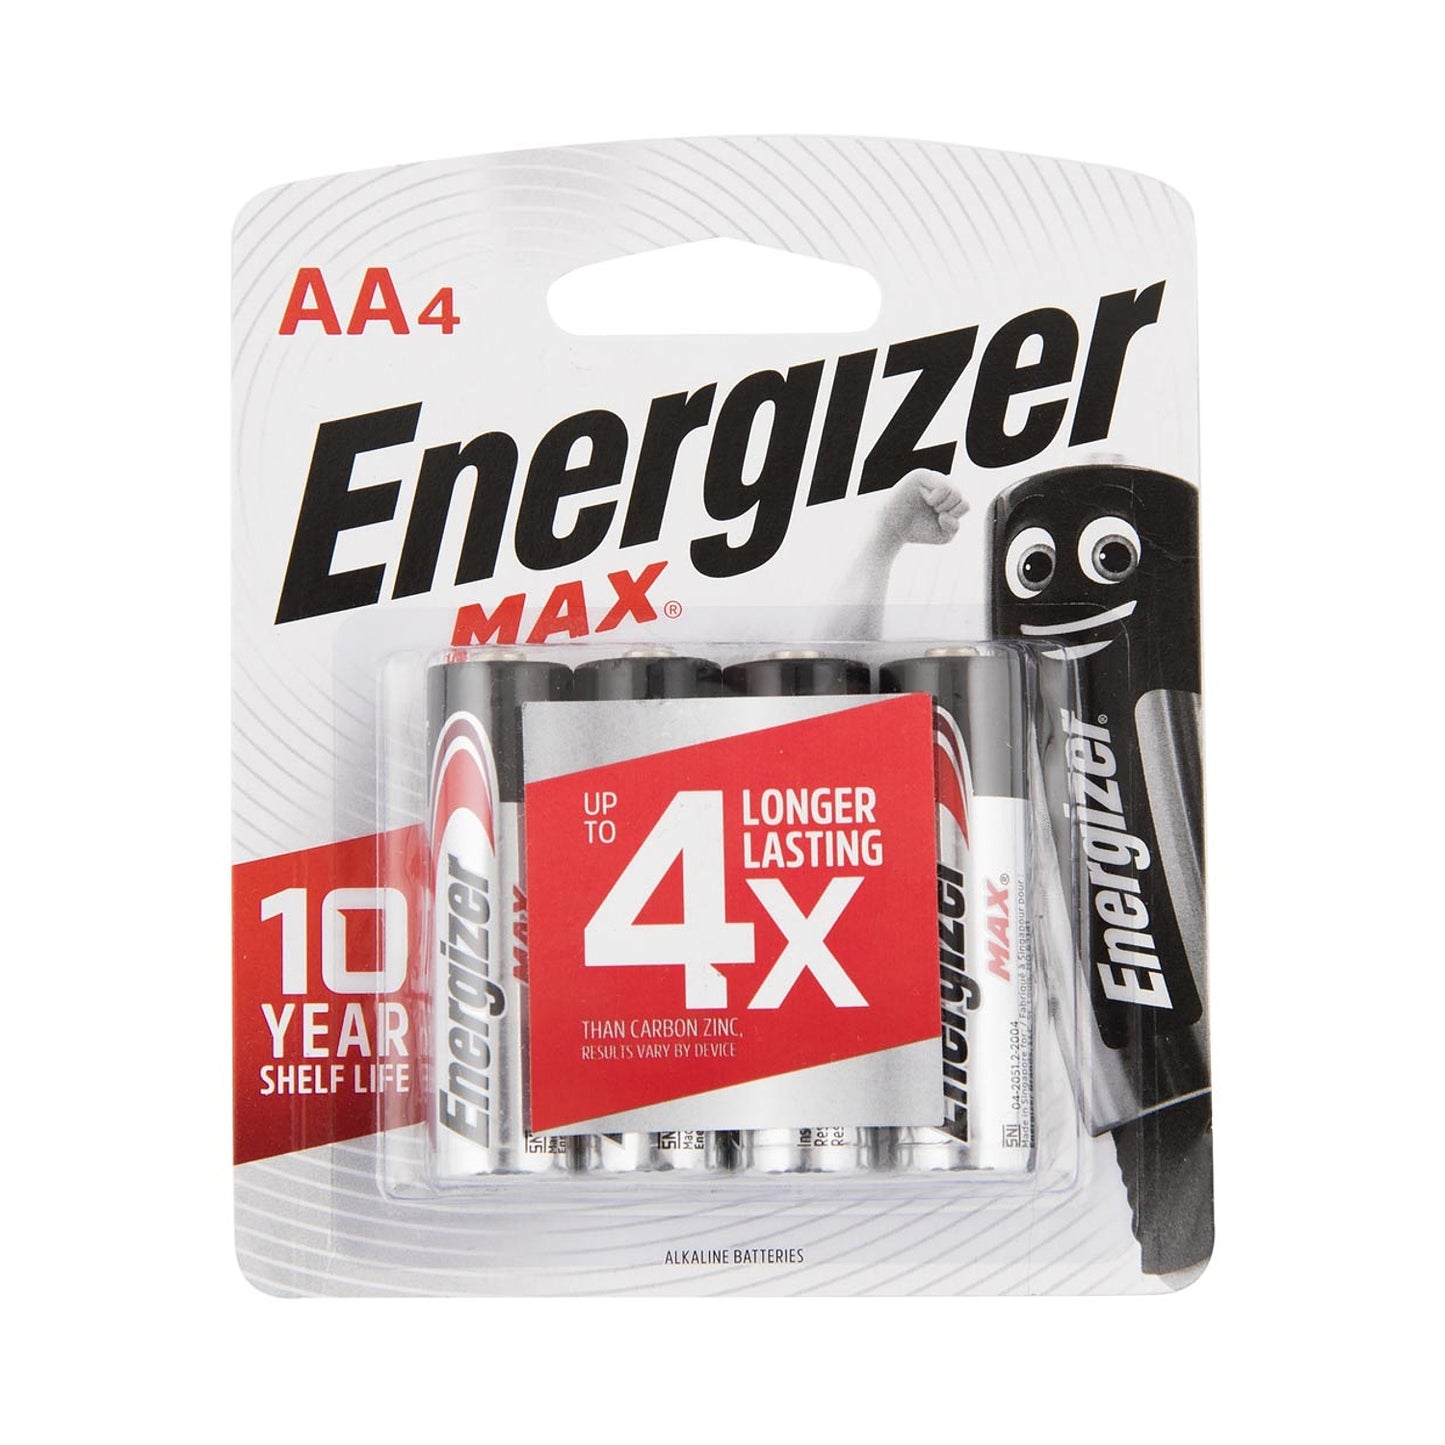 Energizer max aa - 4 pack (moq 12)